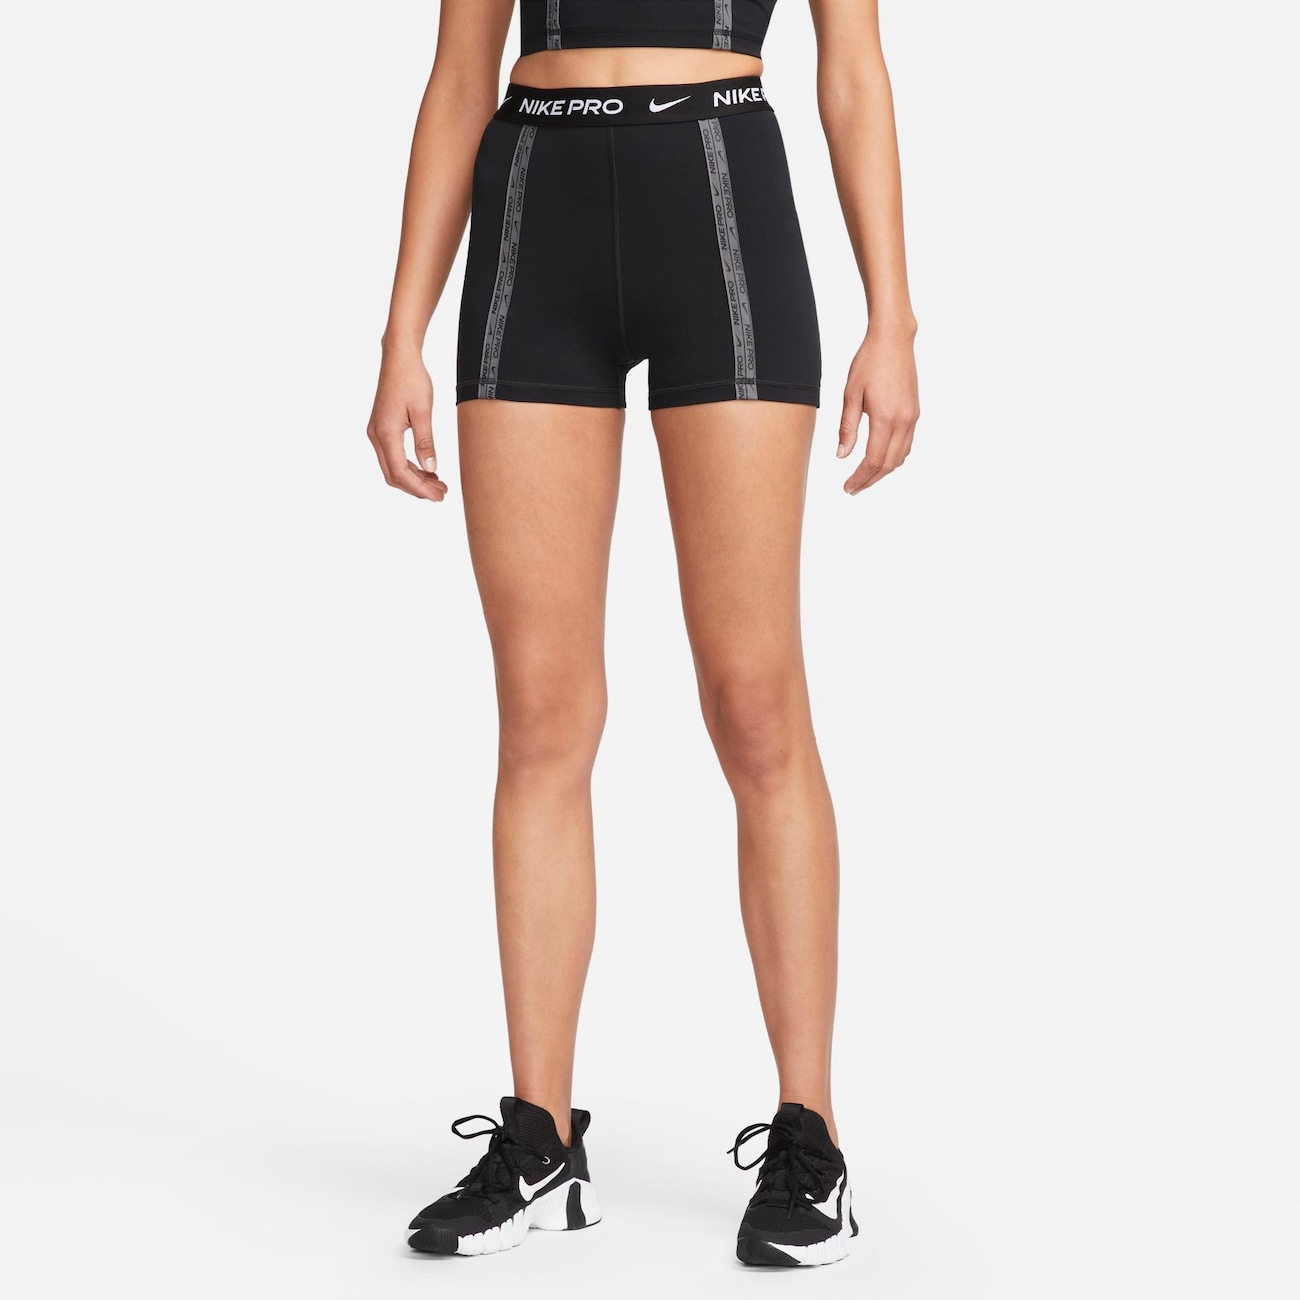 Nike Pro Dri-FIT-shorts med høj talje (8 cm) til kvinder - sort